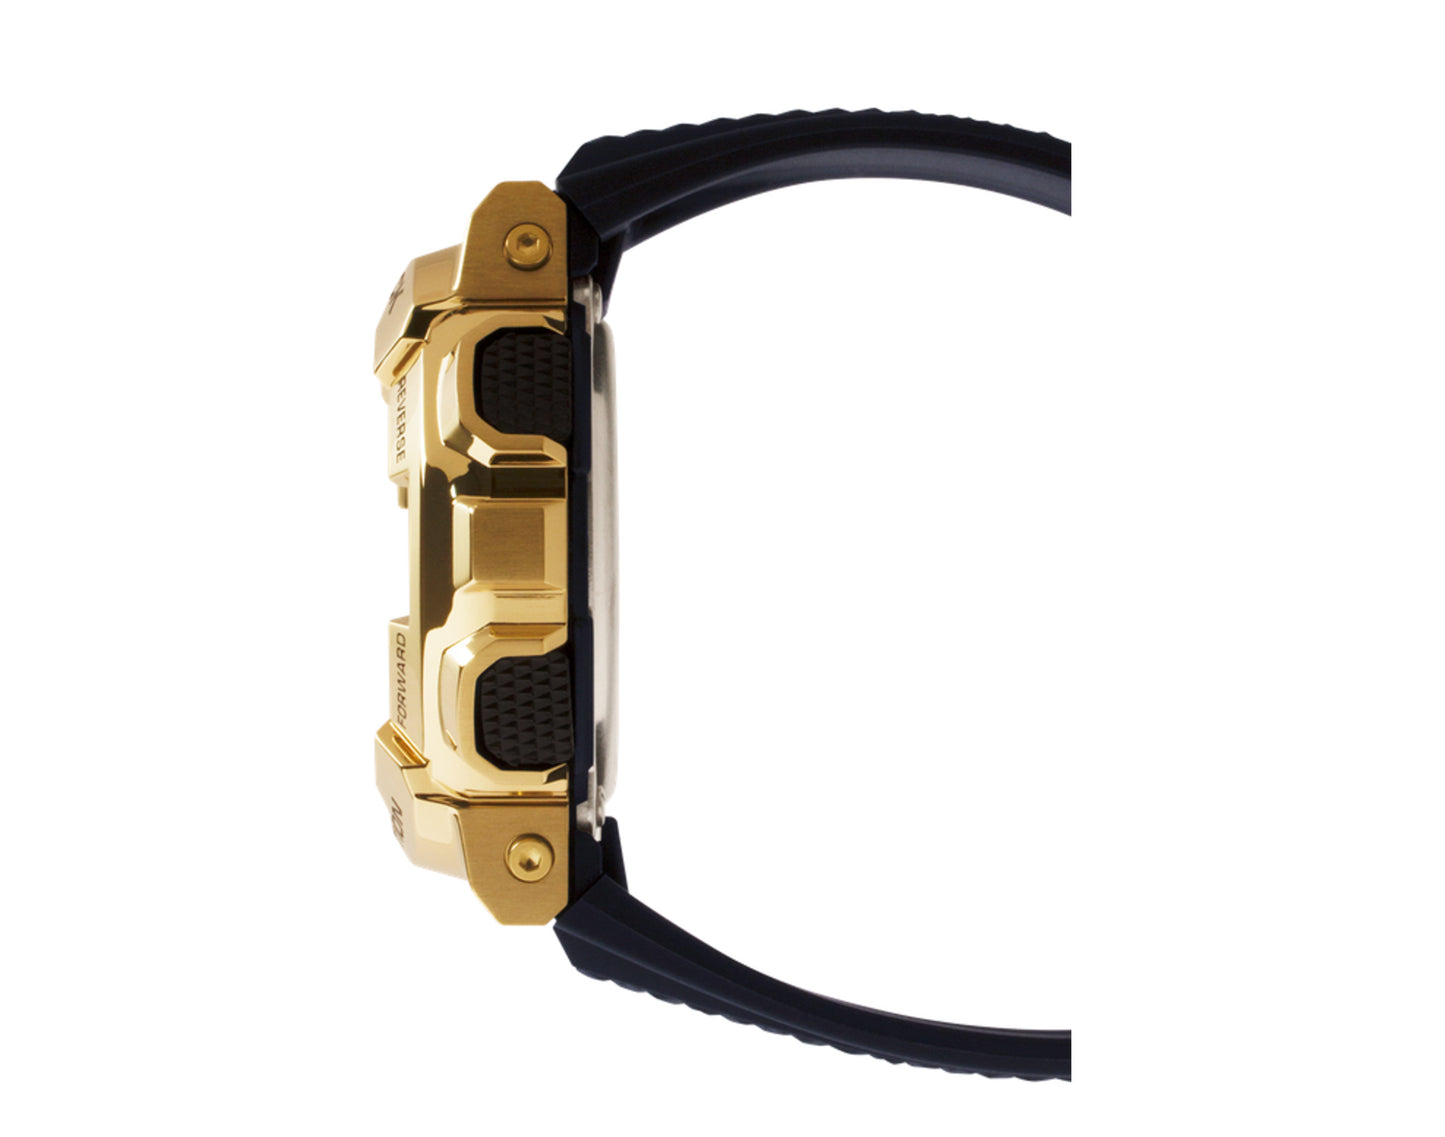 Casio G-Shock GM110G Analog Digital Metal-Resin Gold/Black Watch GM110G-1A9